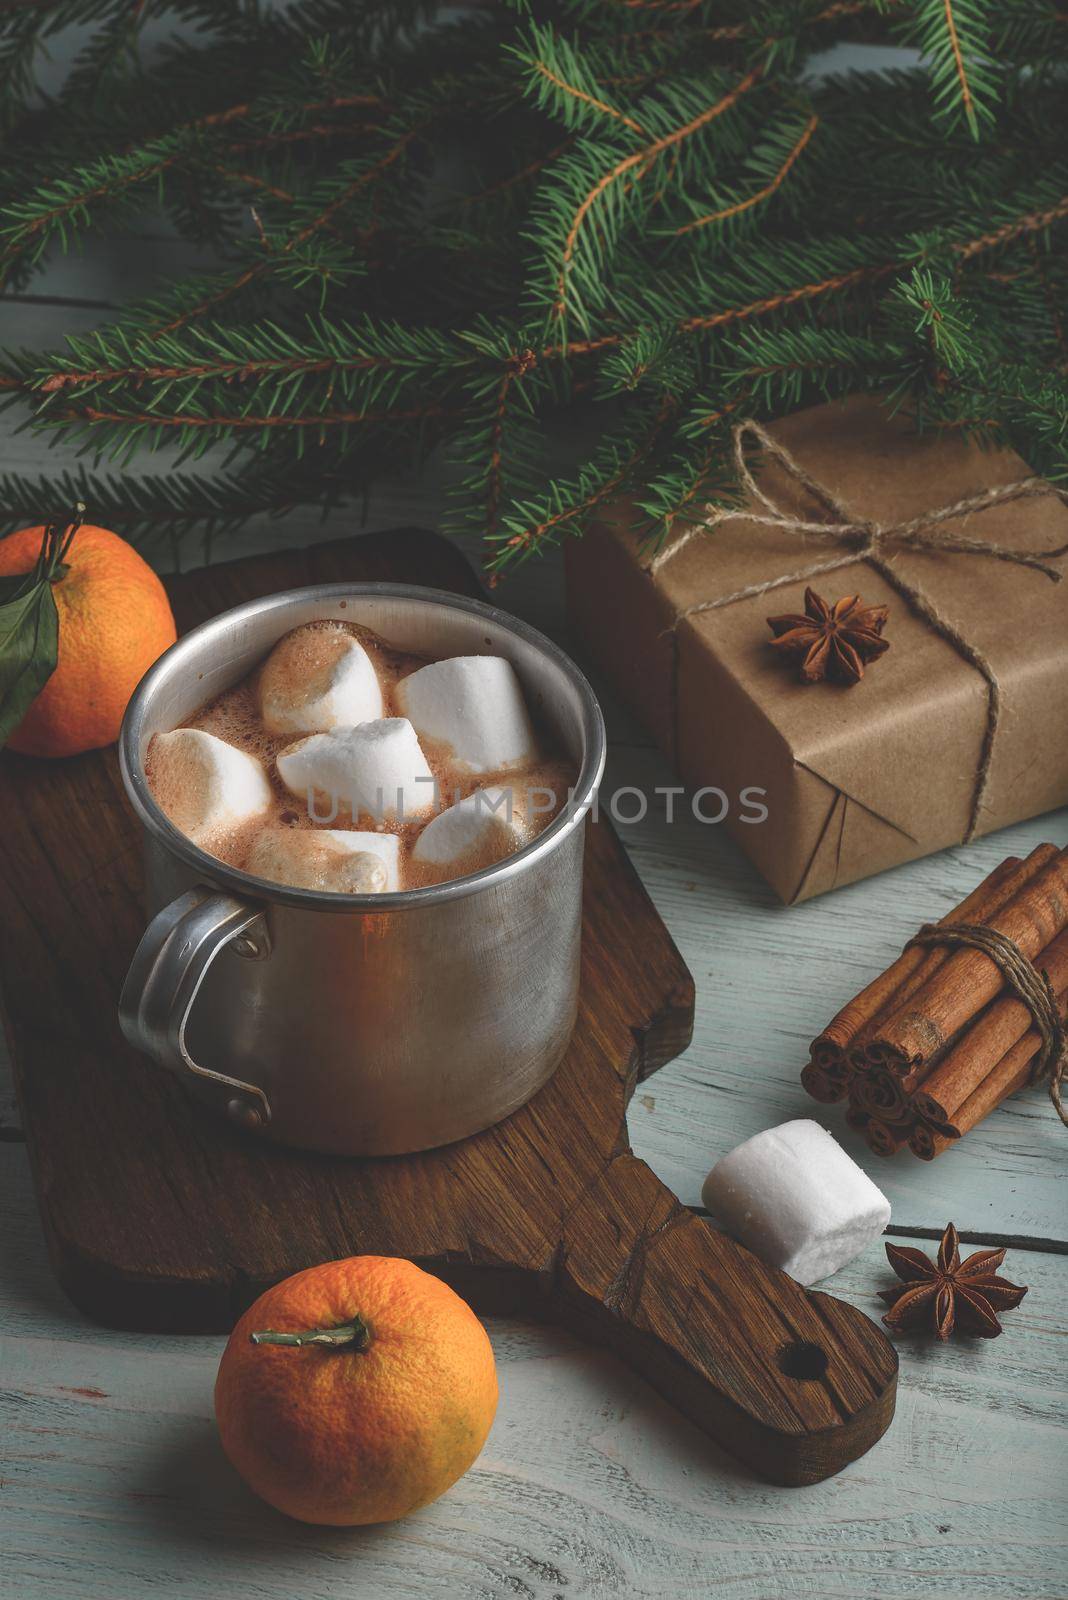 Christmas hot chocolate with marshmallow by Seva_blsv